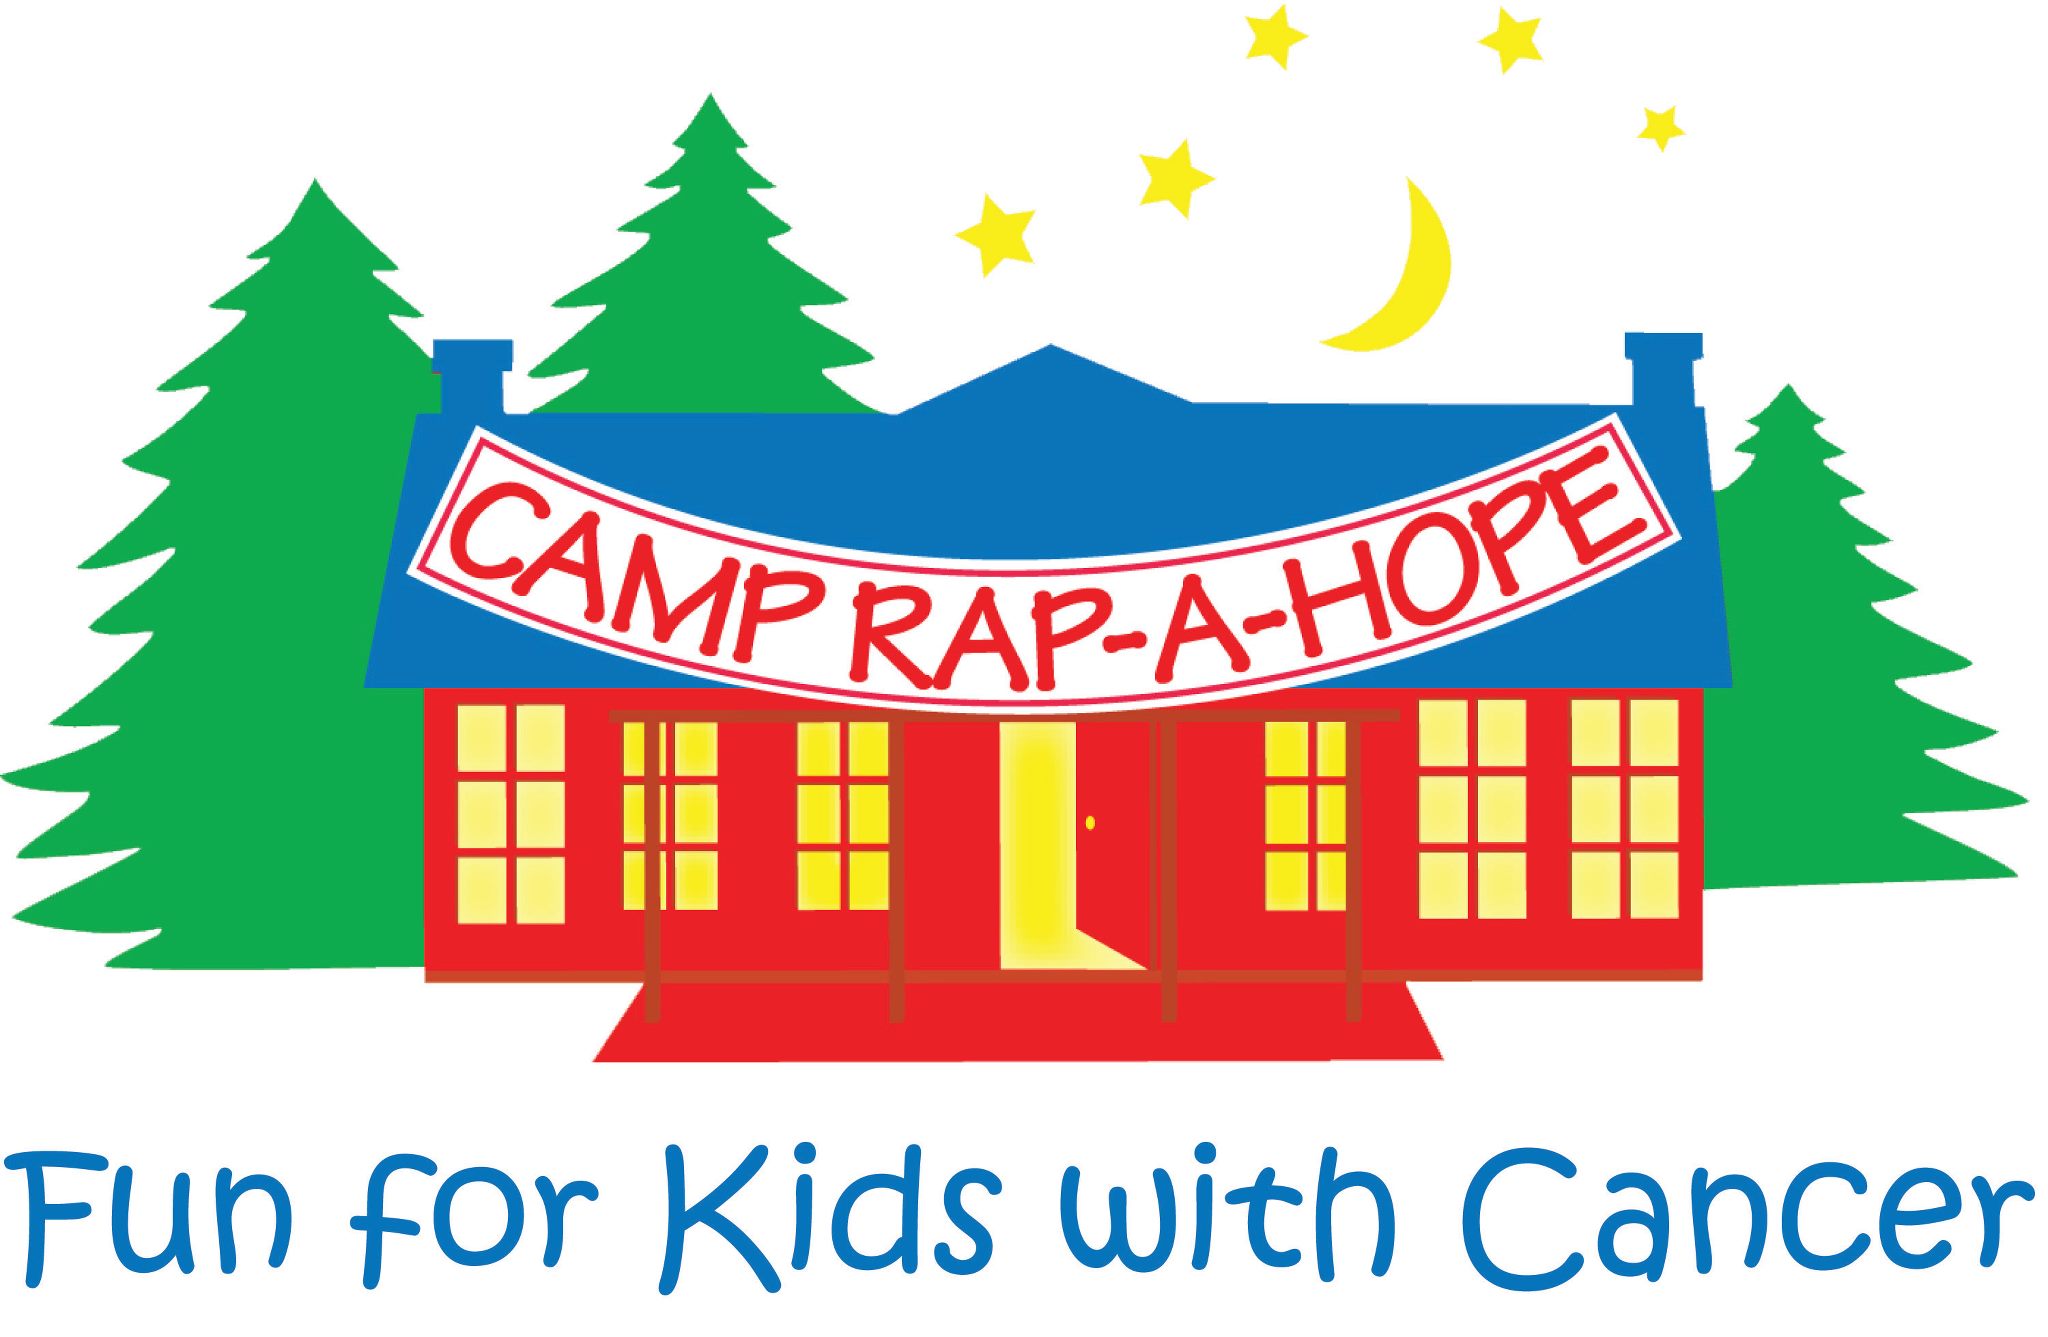 Camp Rap A Hope